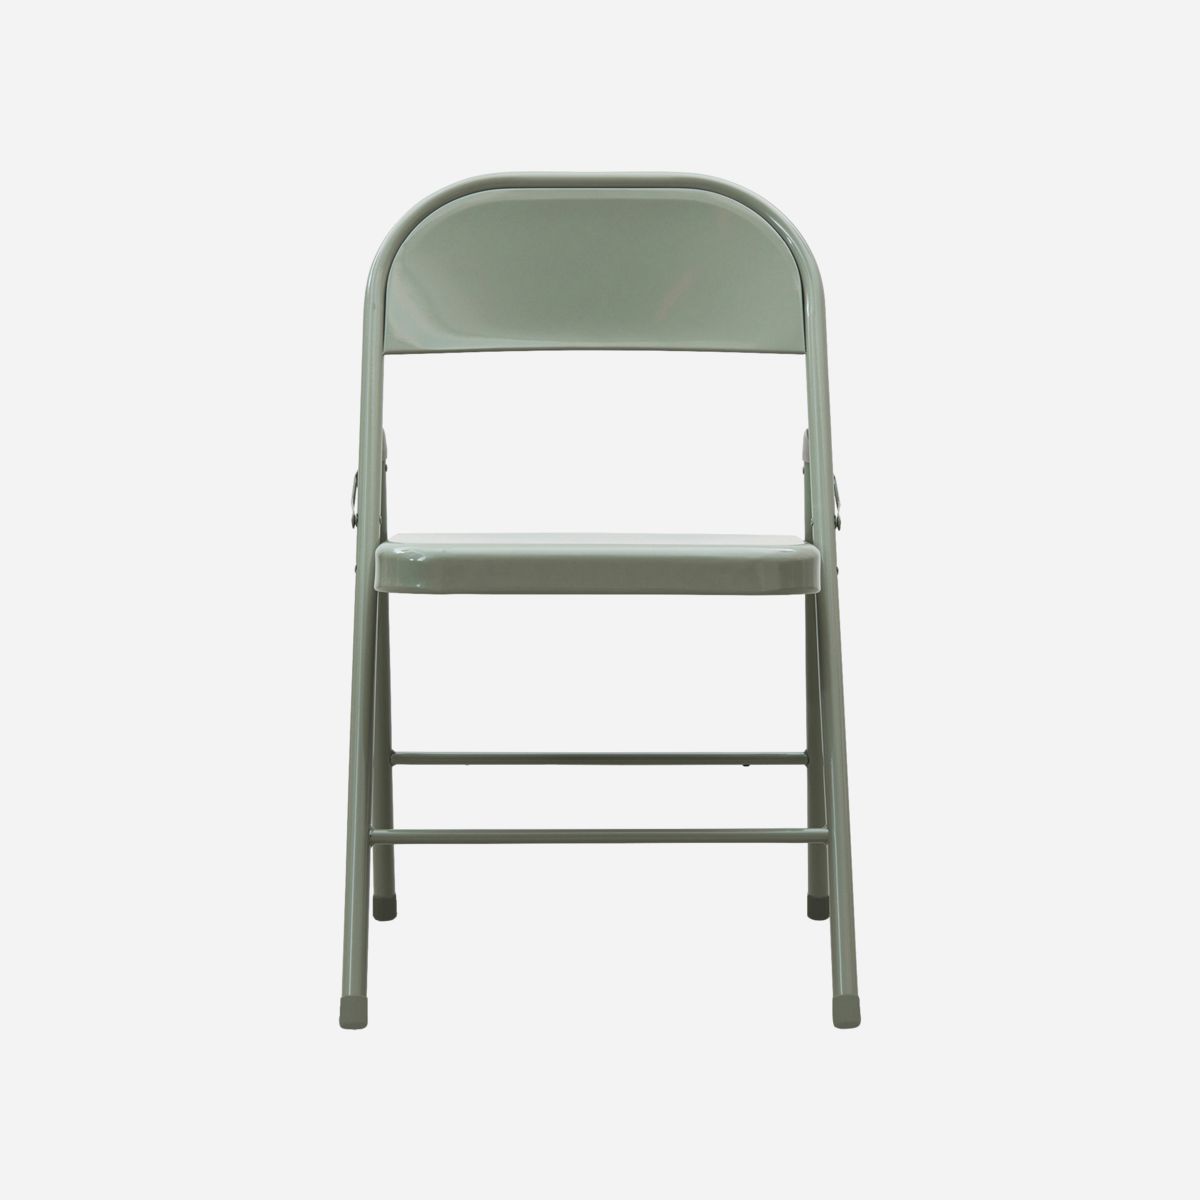 Chair, Fold It, Army green